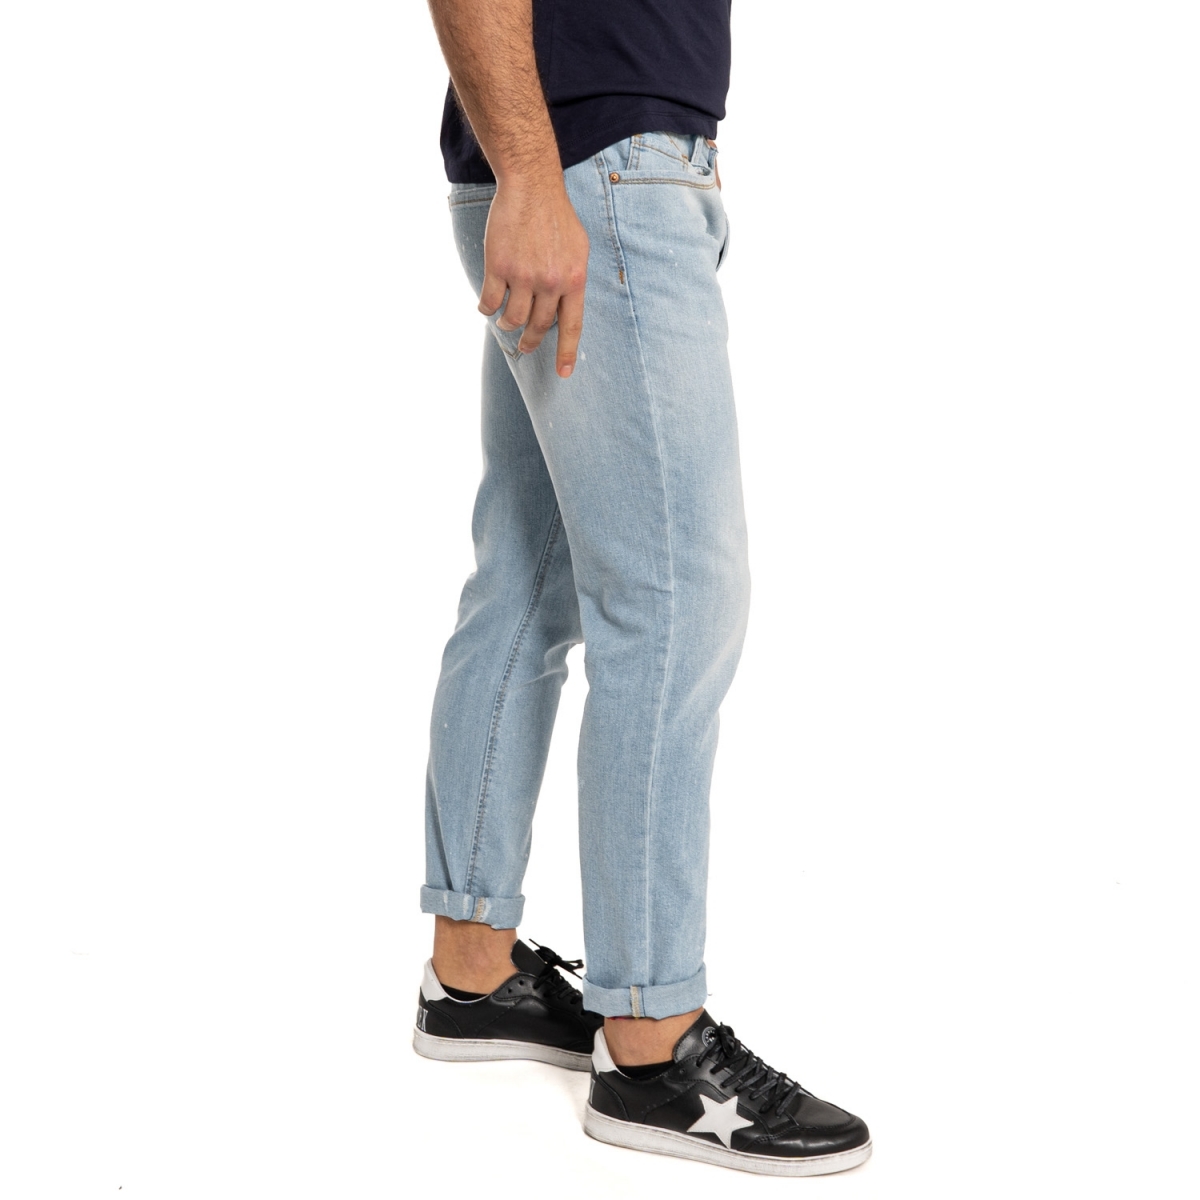 Kleidung Jeans mann Jeans Slim fit LPHM1090-3 LANDEK PARK Cafedelmar Shop